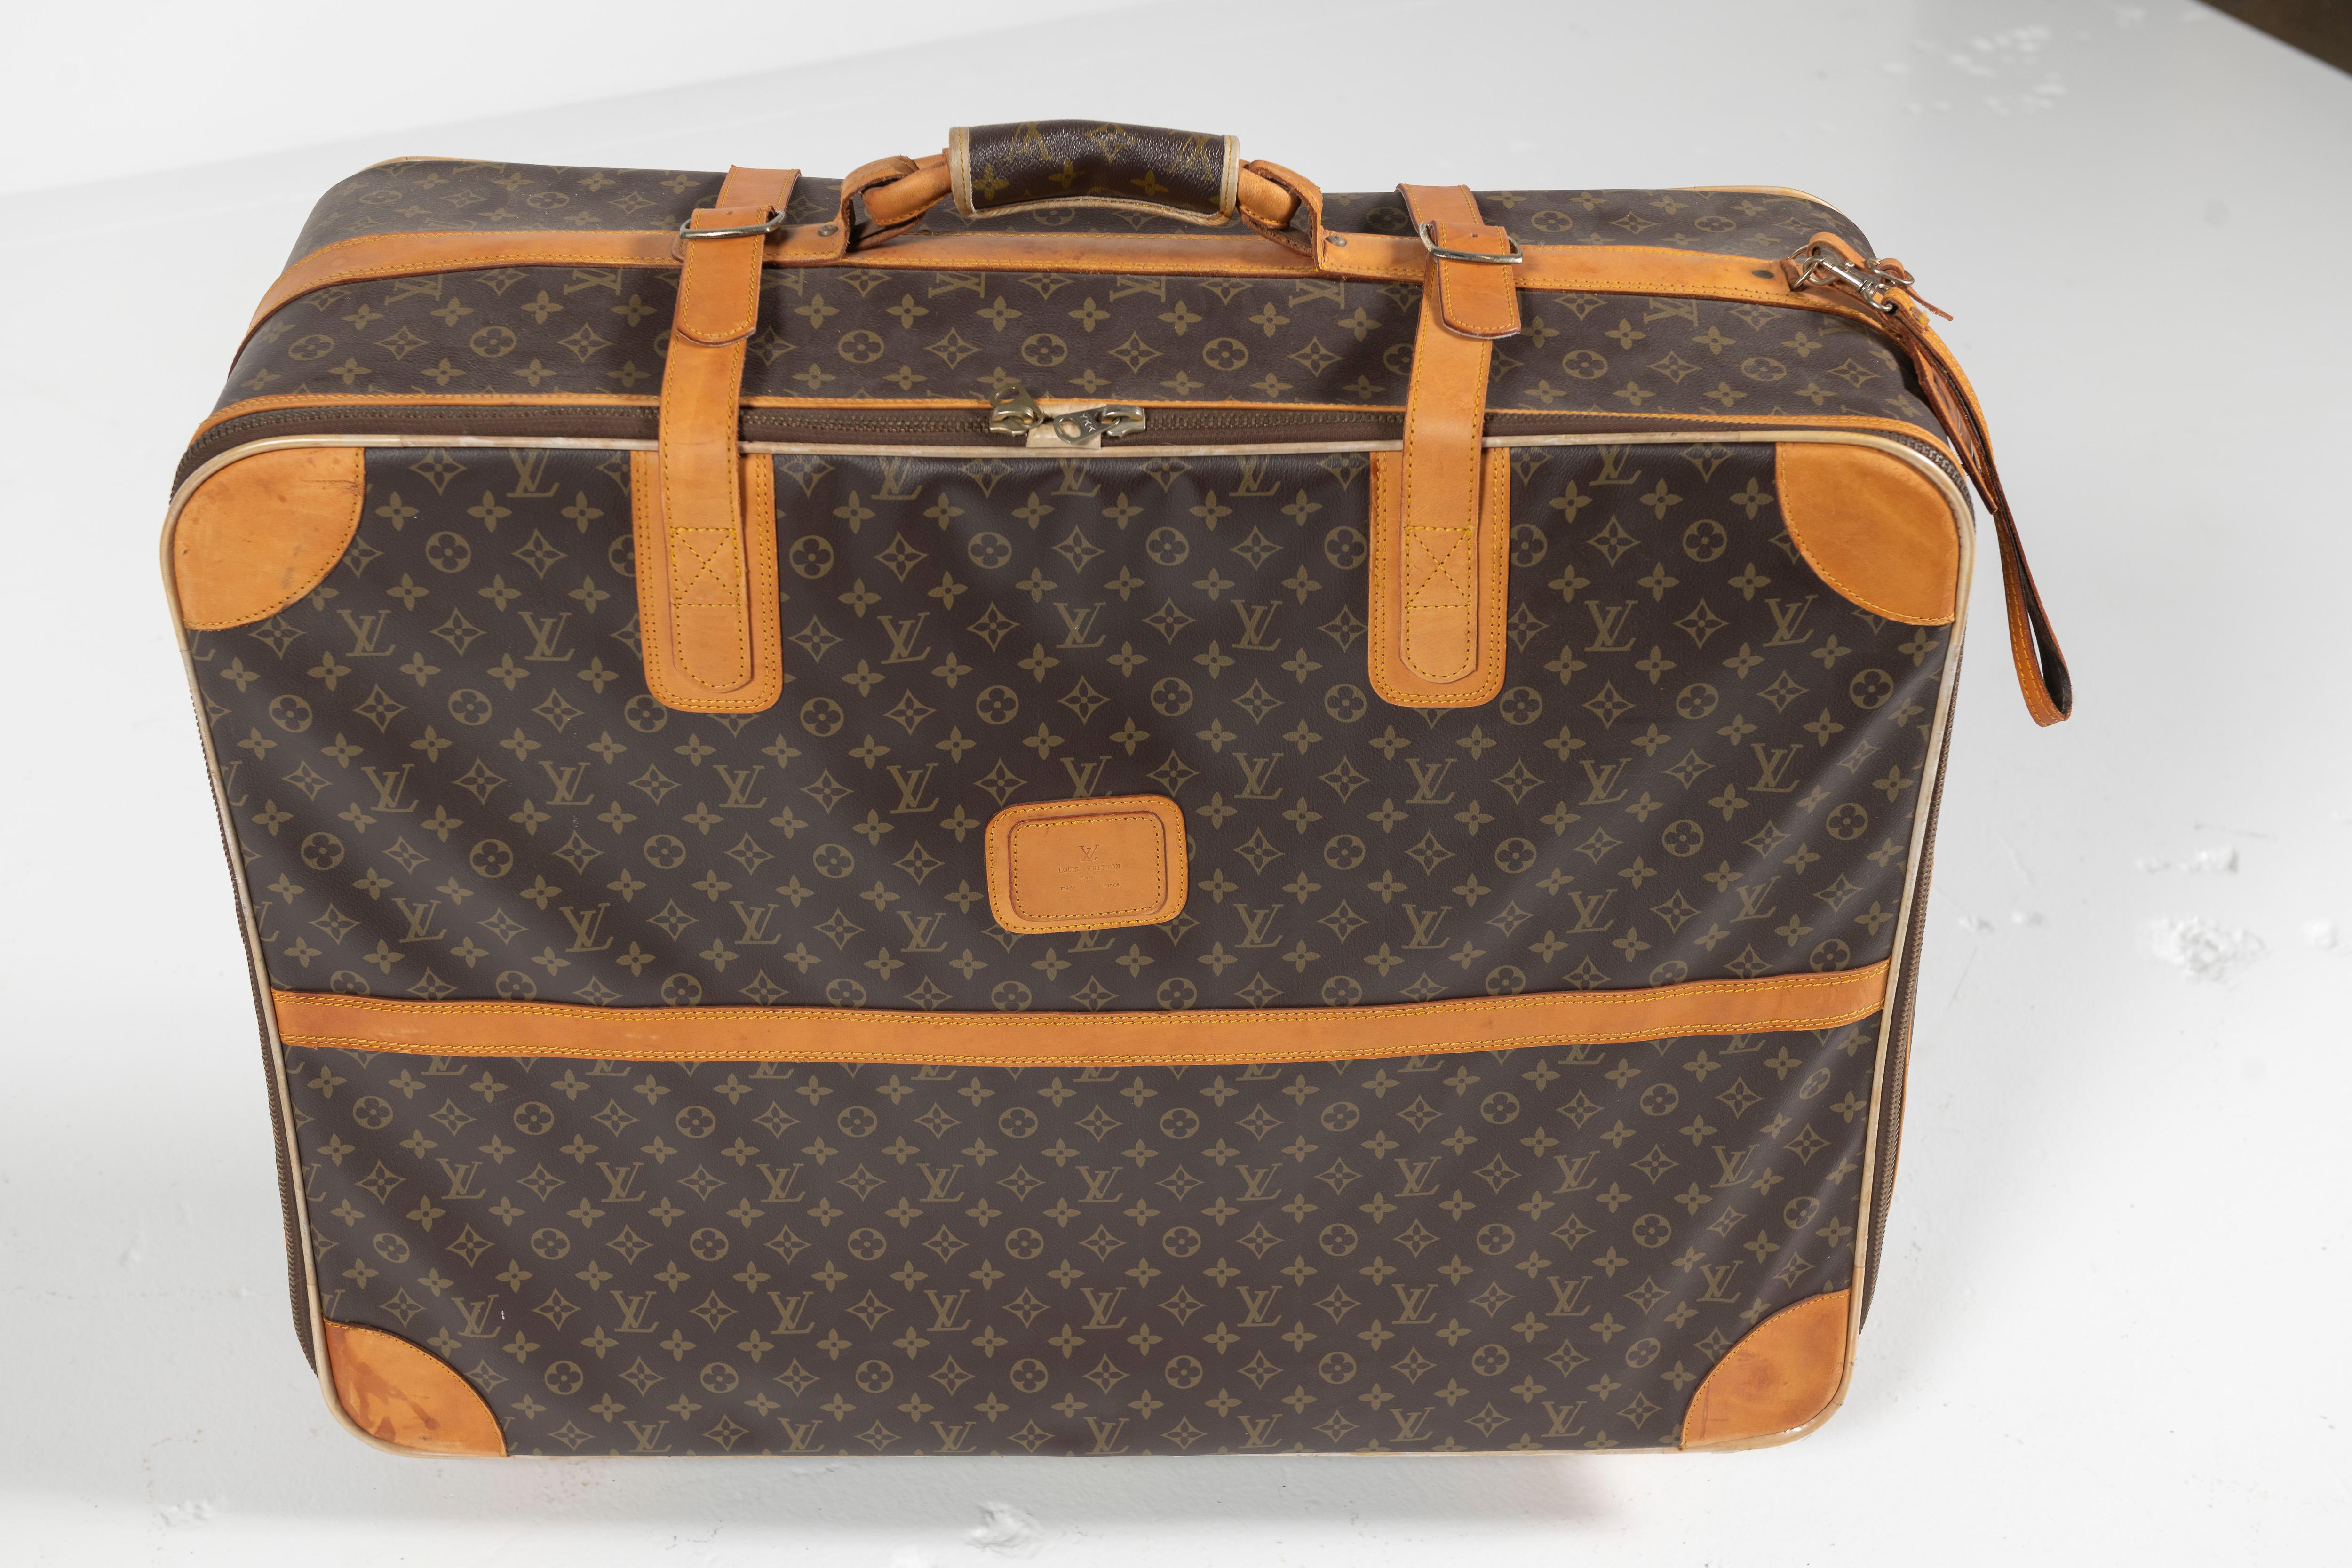 Vintage Louis Vuitton Suitcase, Monogrammed Coated Canvas, Large-Sized For Sale 1